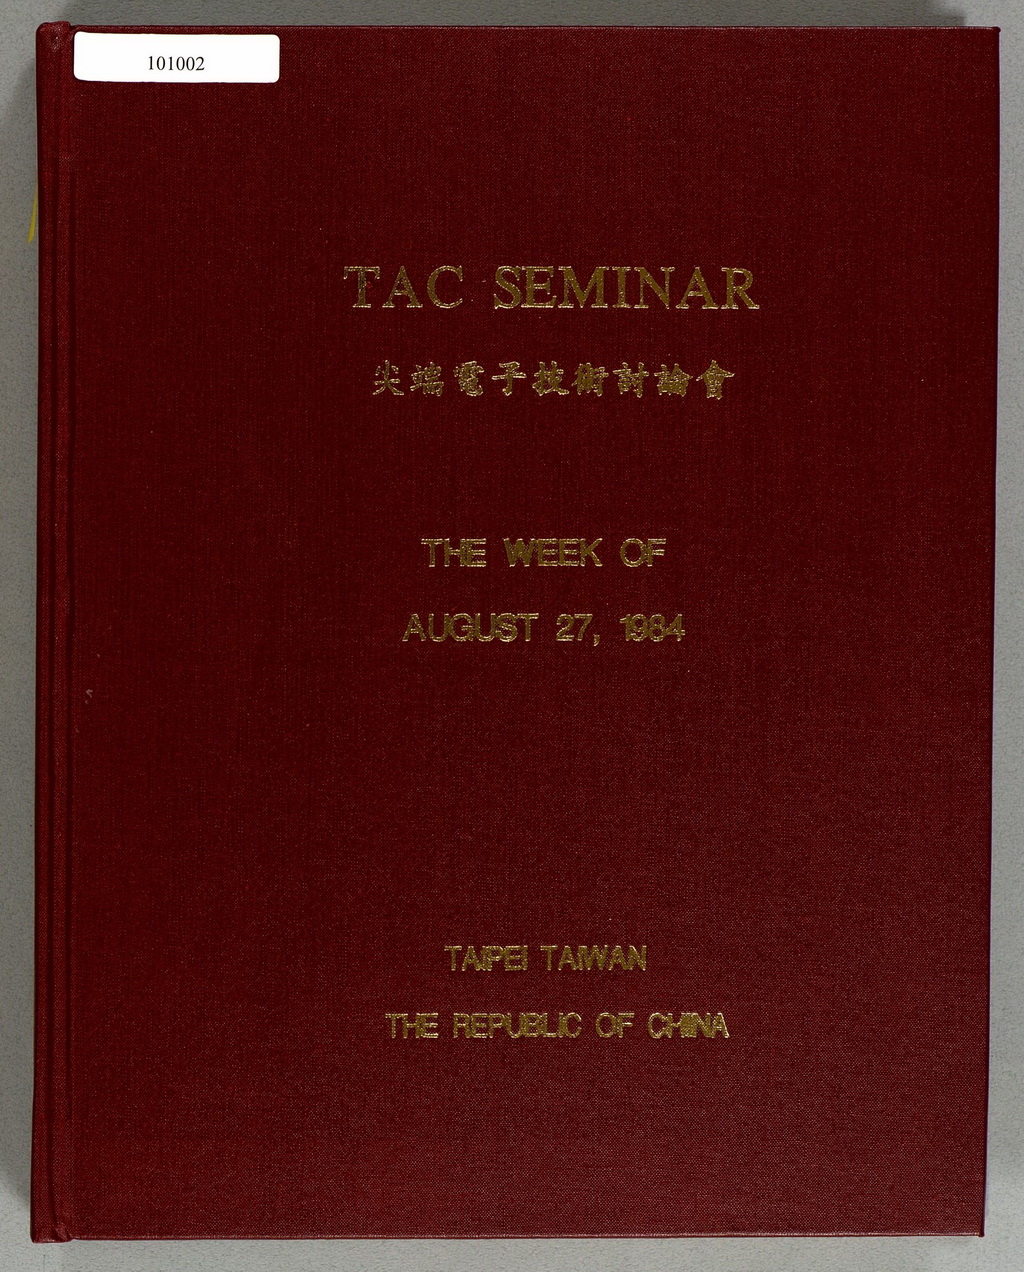 TAC Seminar（the week of August 27, 1984）